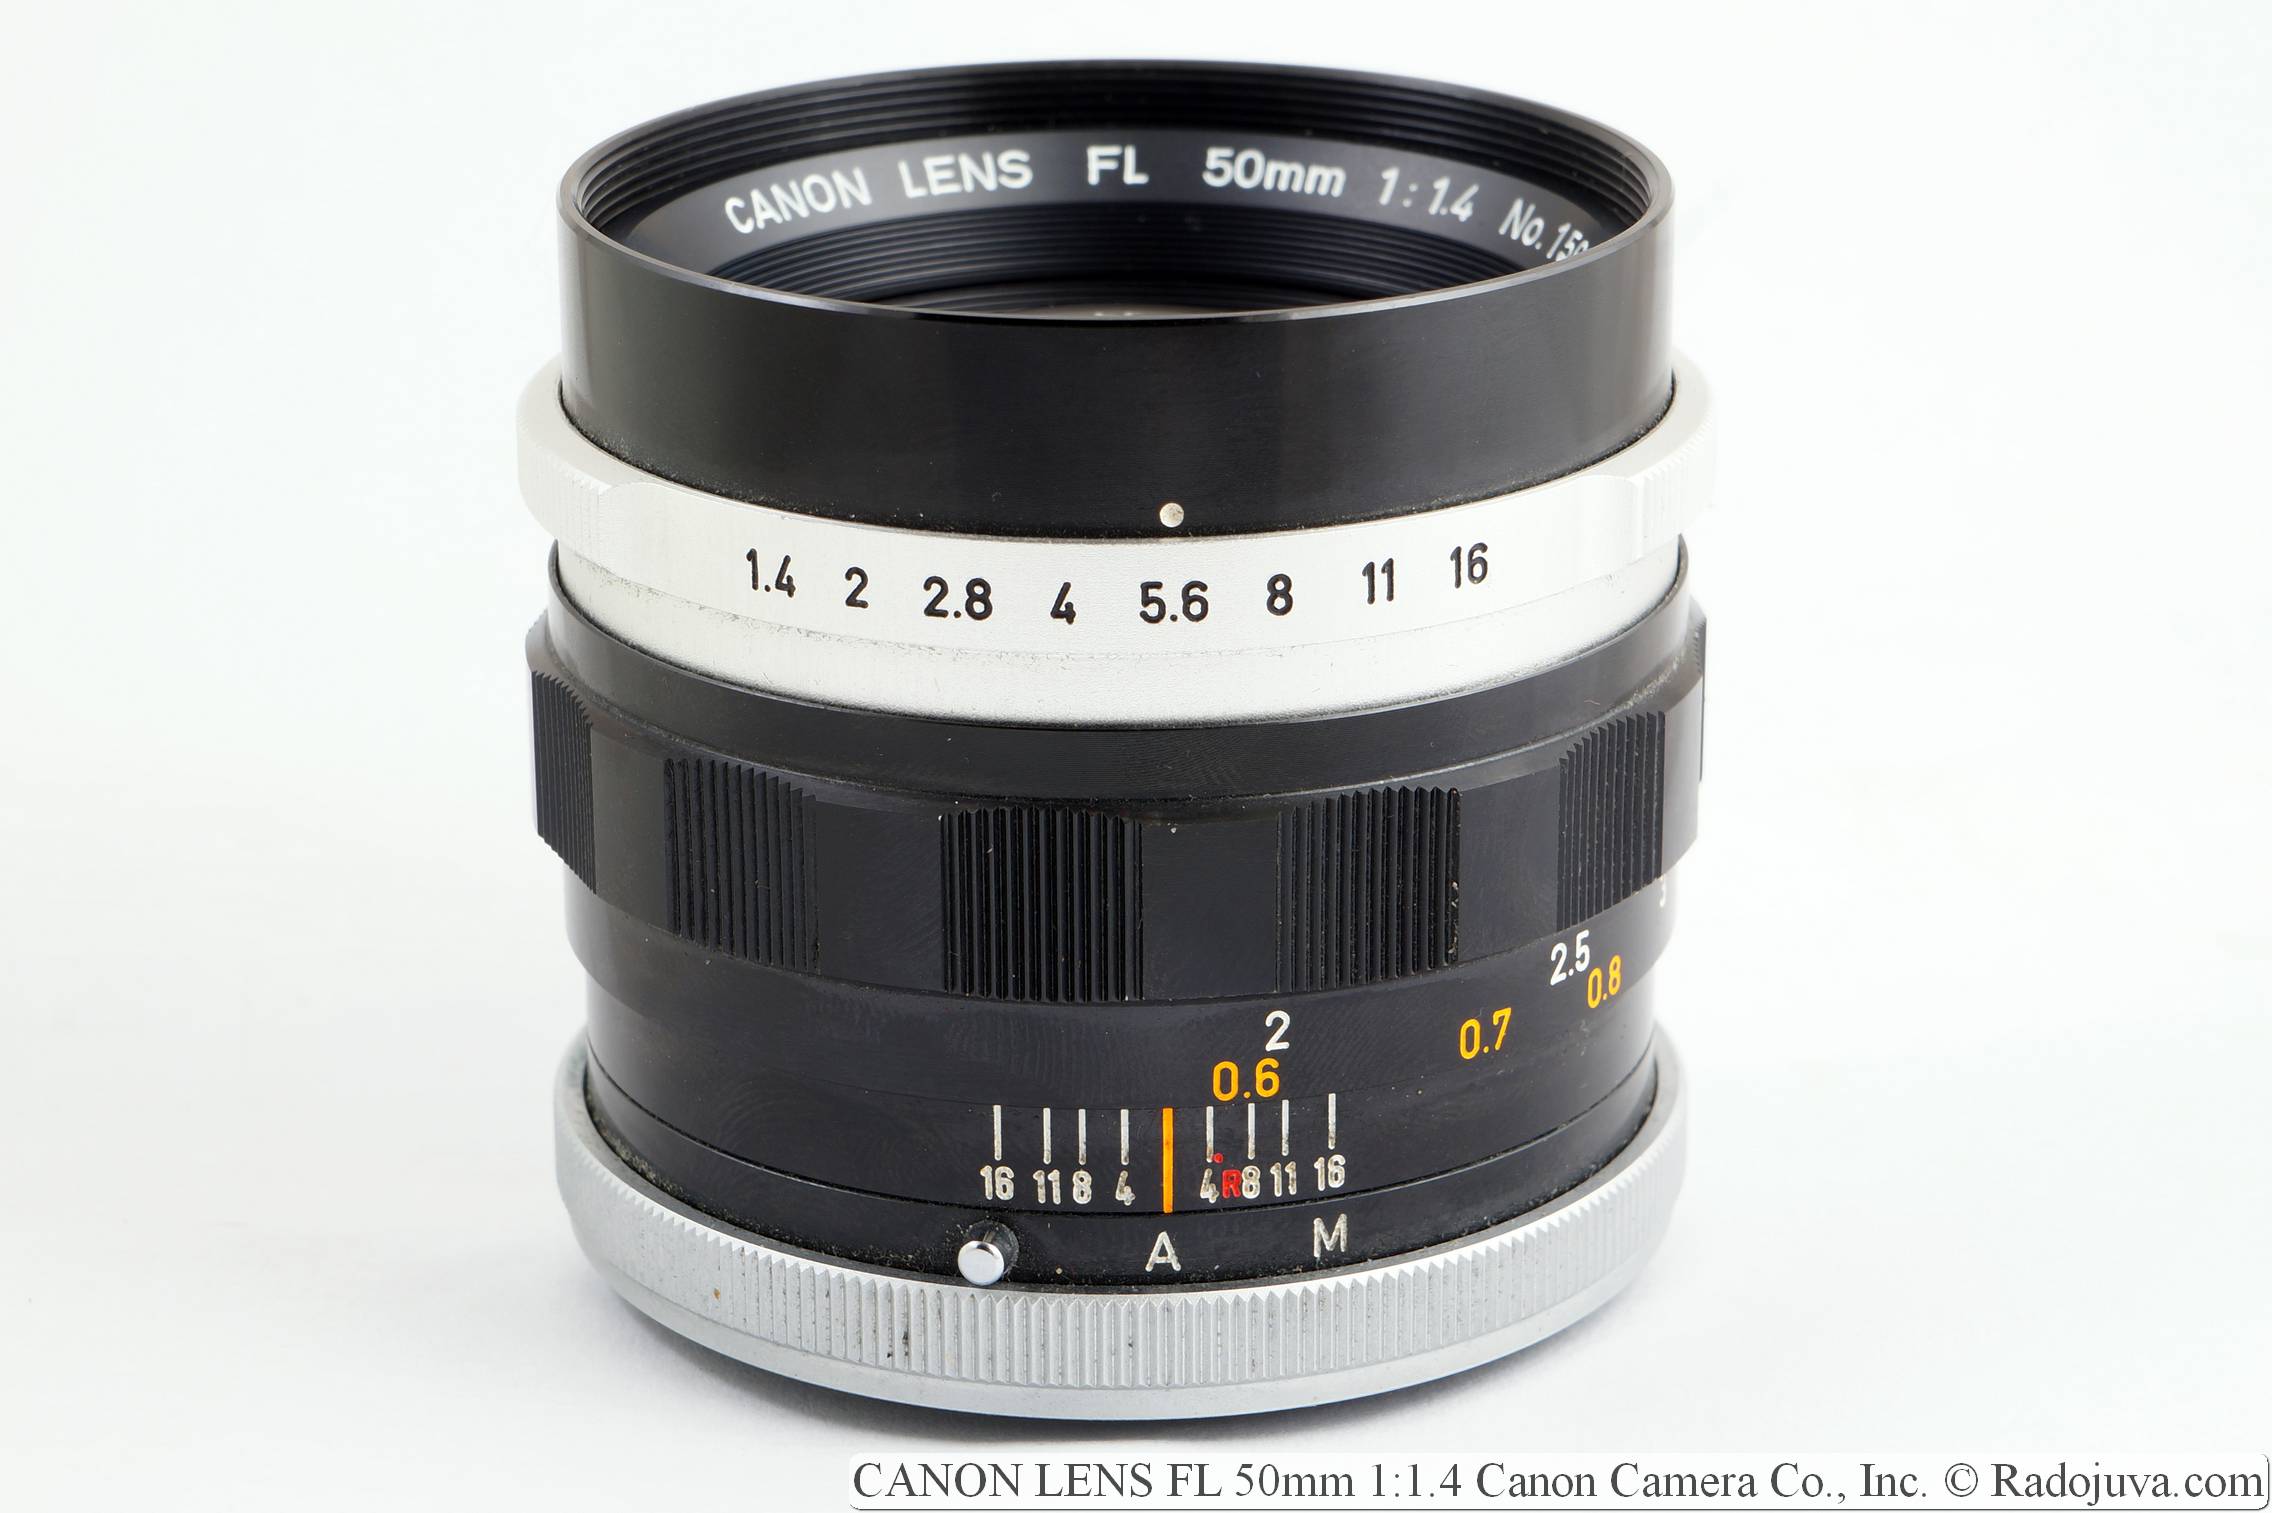 CANON LENS FL 50mm 1:1.4 Quick Review Canon Camera Co., Inc. (1968